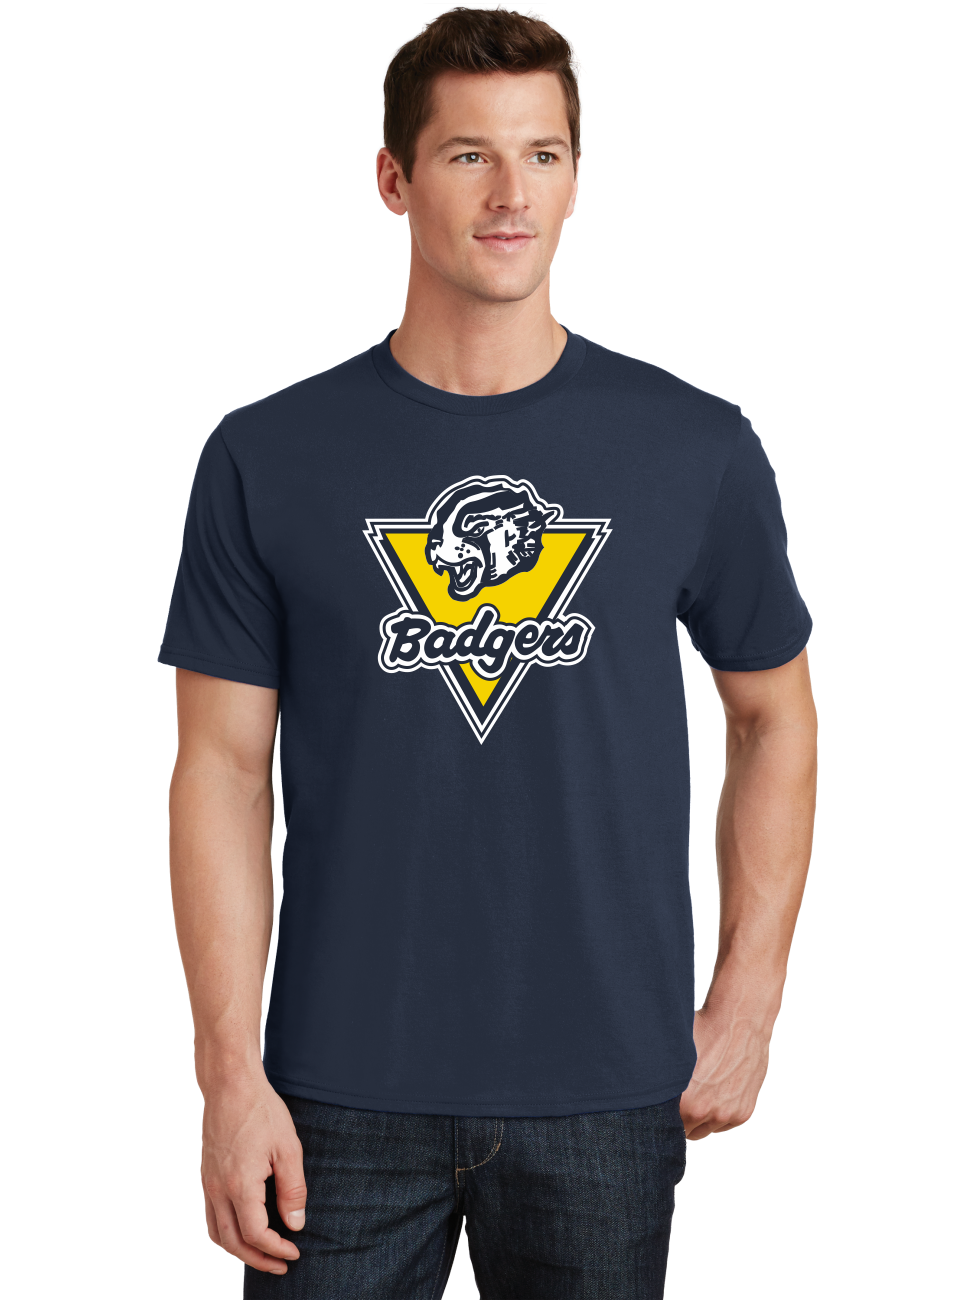 Logo T-Shirt - BCB - Multiple Colors Available